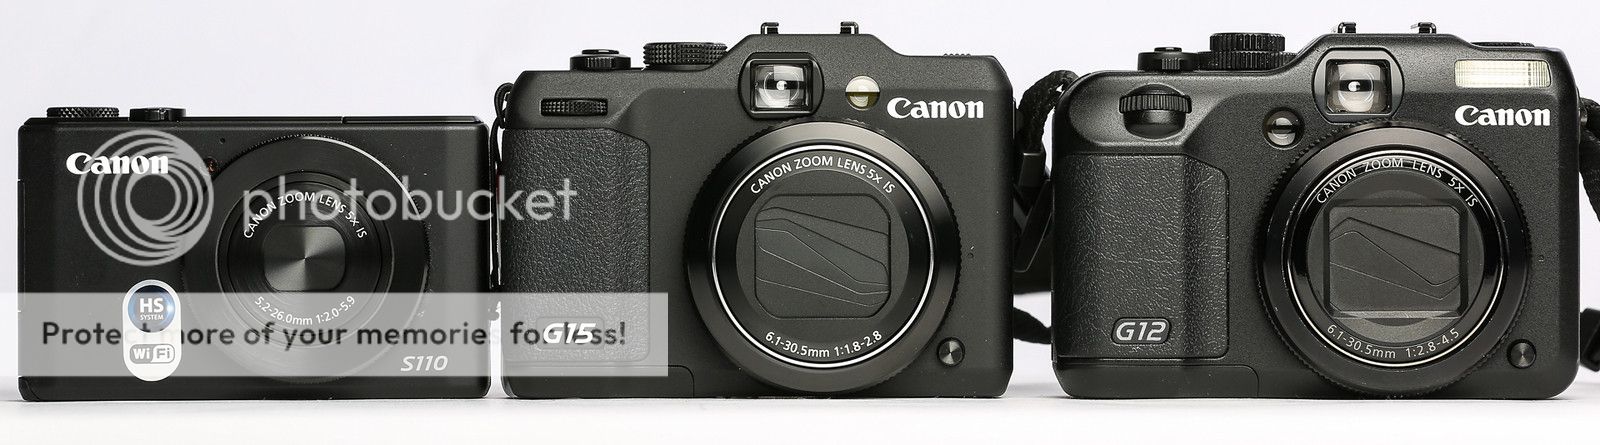 Canon PowerShot G15 vs G12 vs S110 Comparison